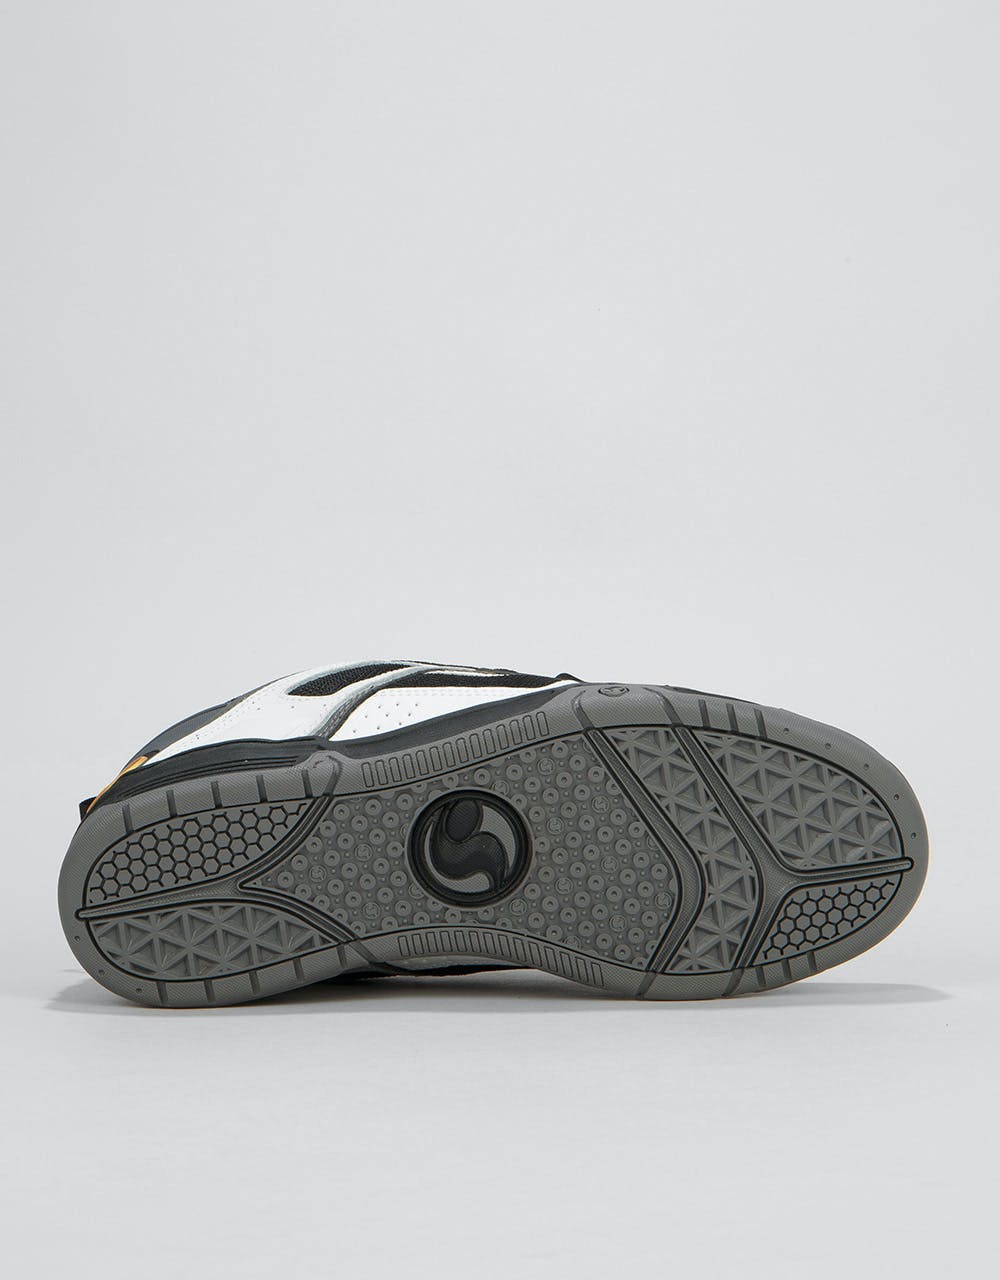 DVS Comanche Skate Shoes - White/Charcoal Nubuck